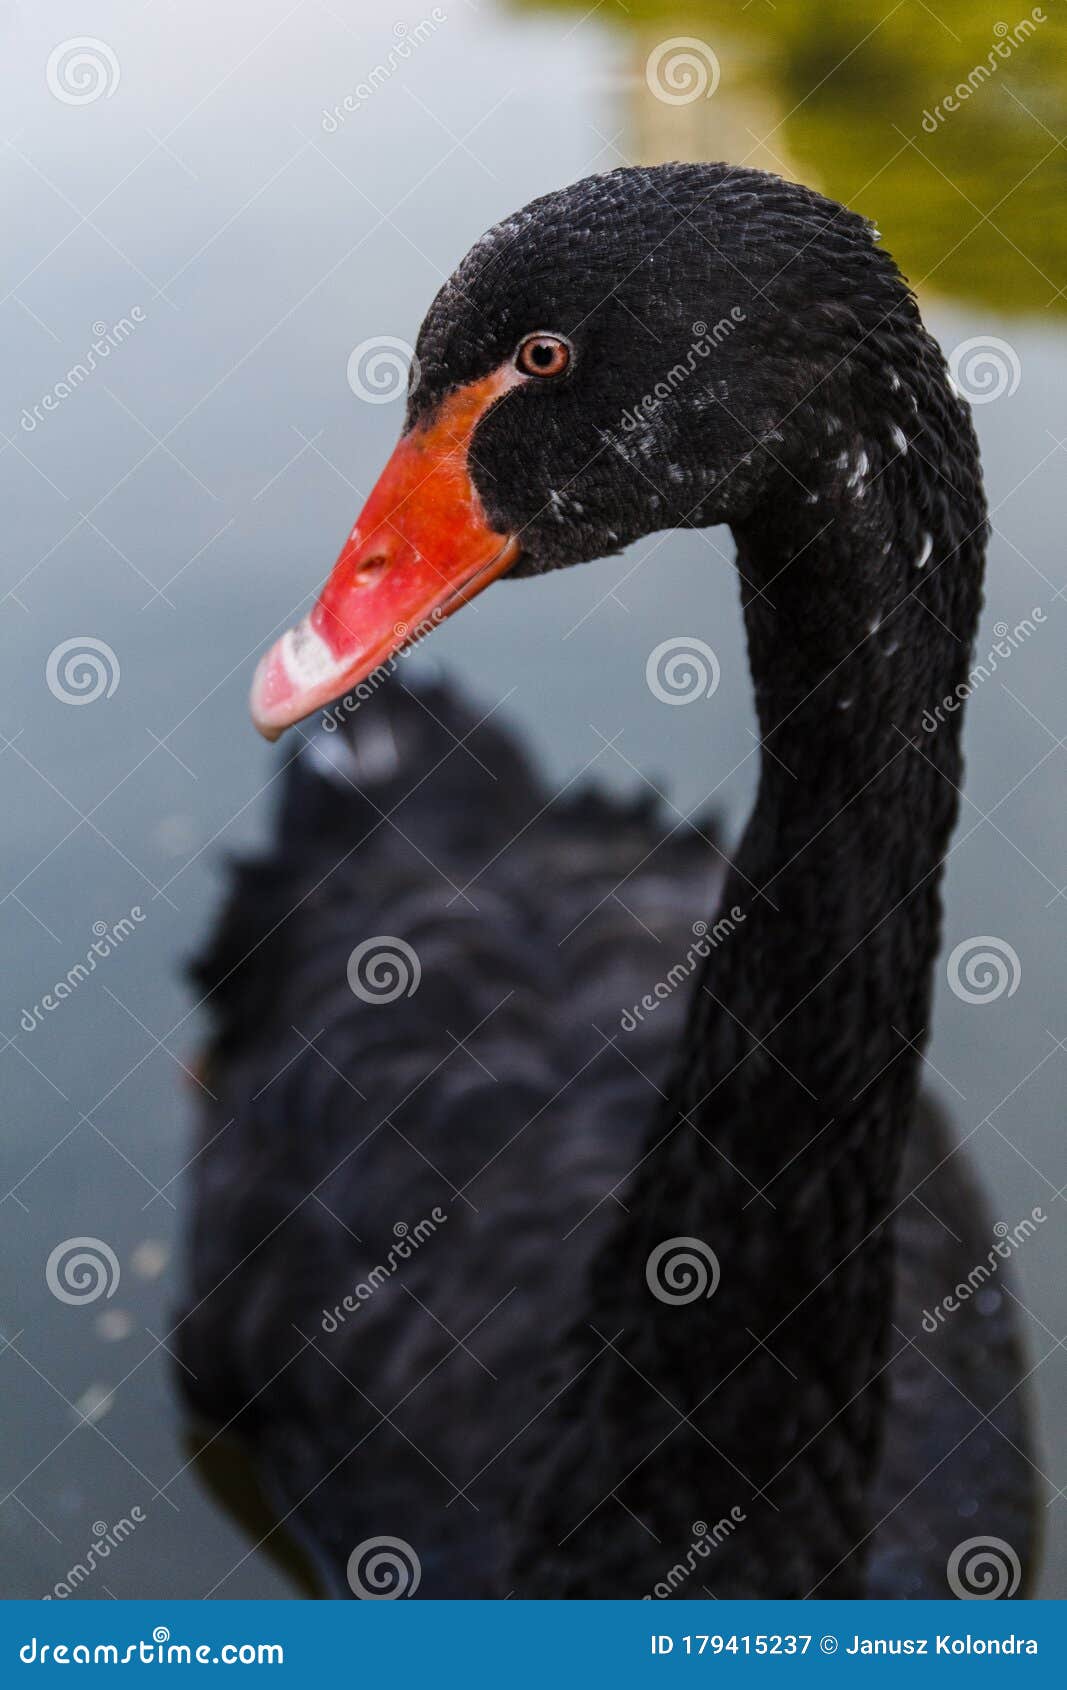 Uheldig ordlyd klokke Black Swan Close Up Portrait Stock Image - Image of difficult, metaphor:  179415237